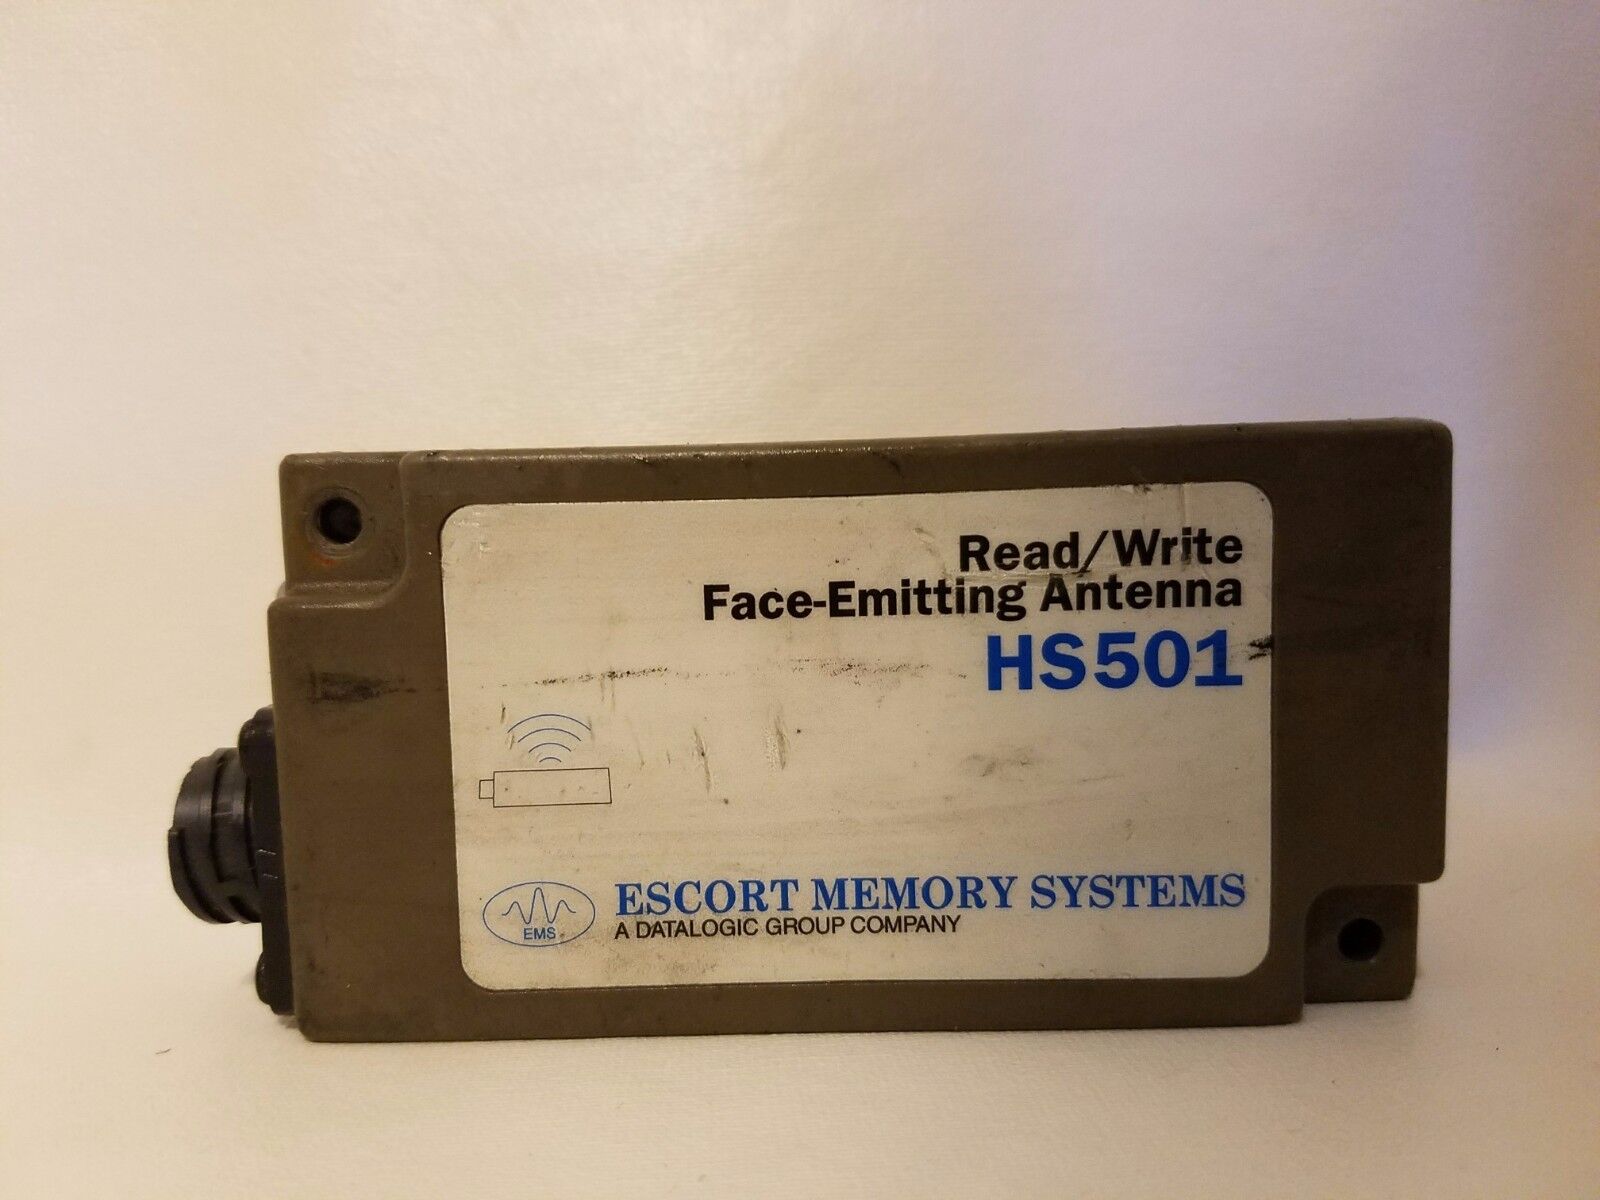 Escort Memory Systems HS501 Read / Write Face-Emitting Antenna, EMS, Datalogic